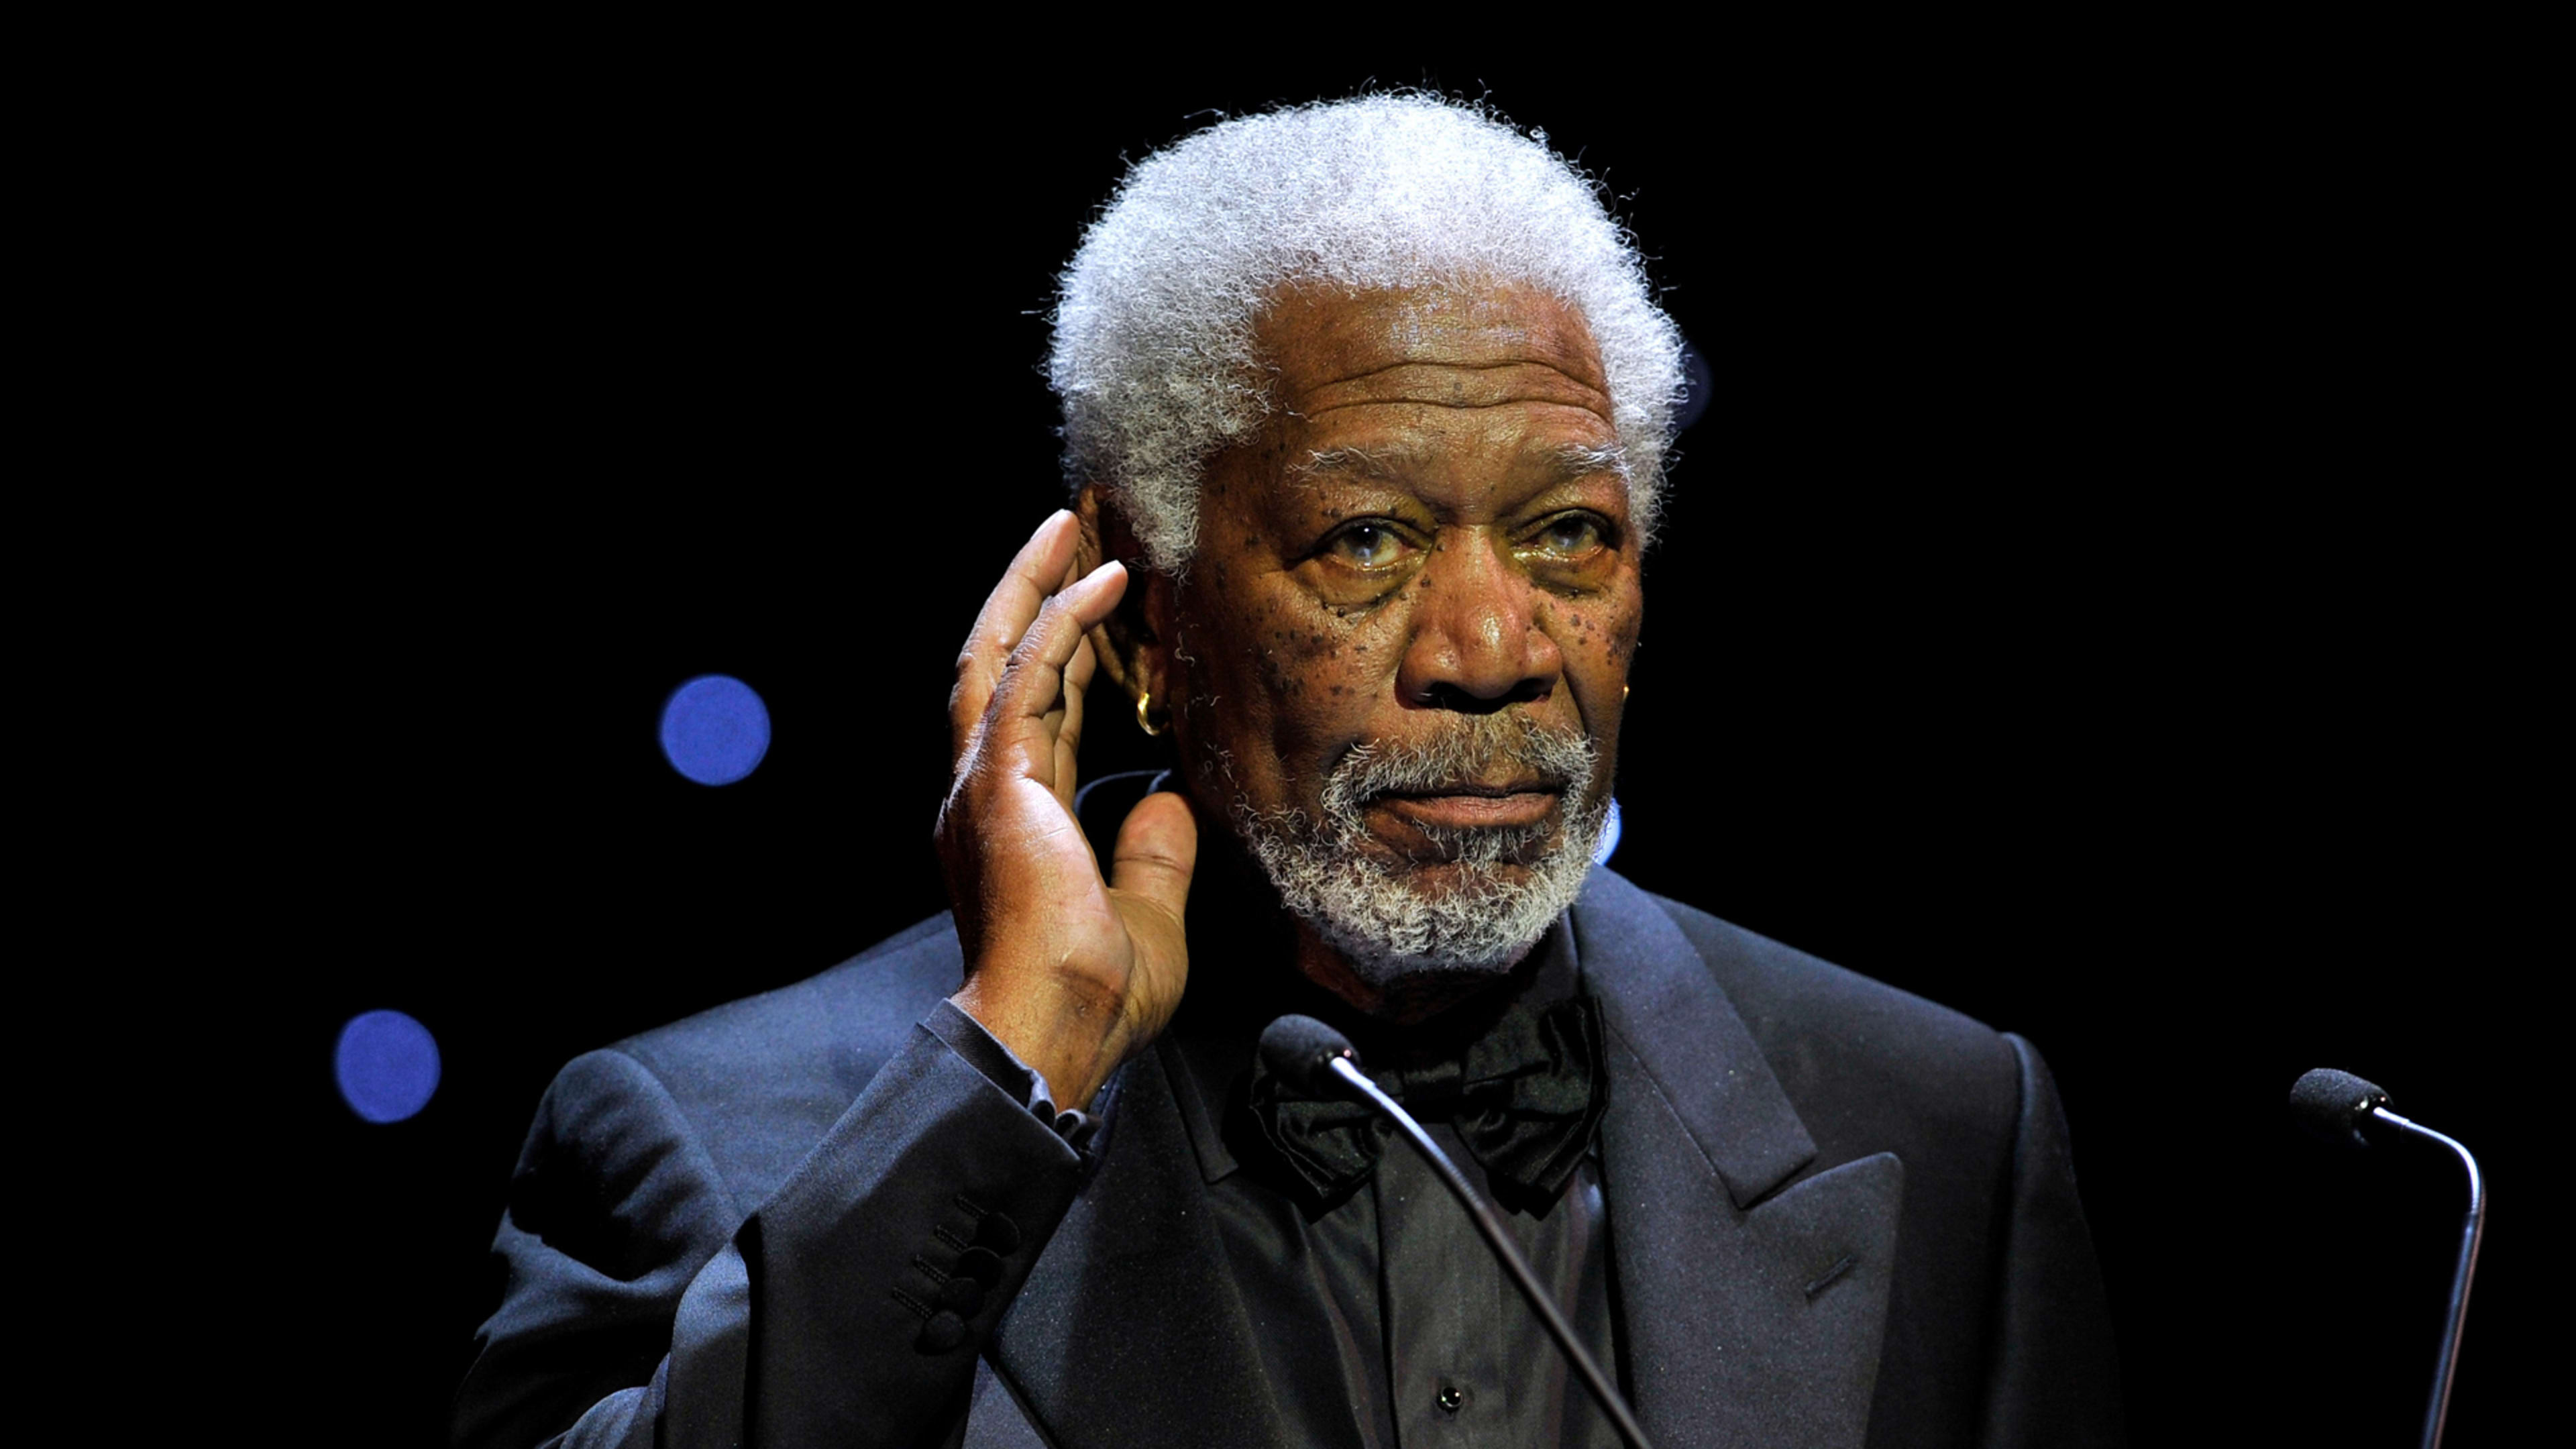 Eight women have accused Morgan Freeman of inappropriate behavior